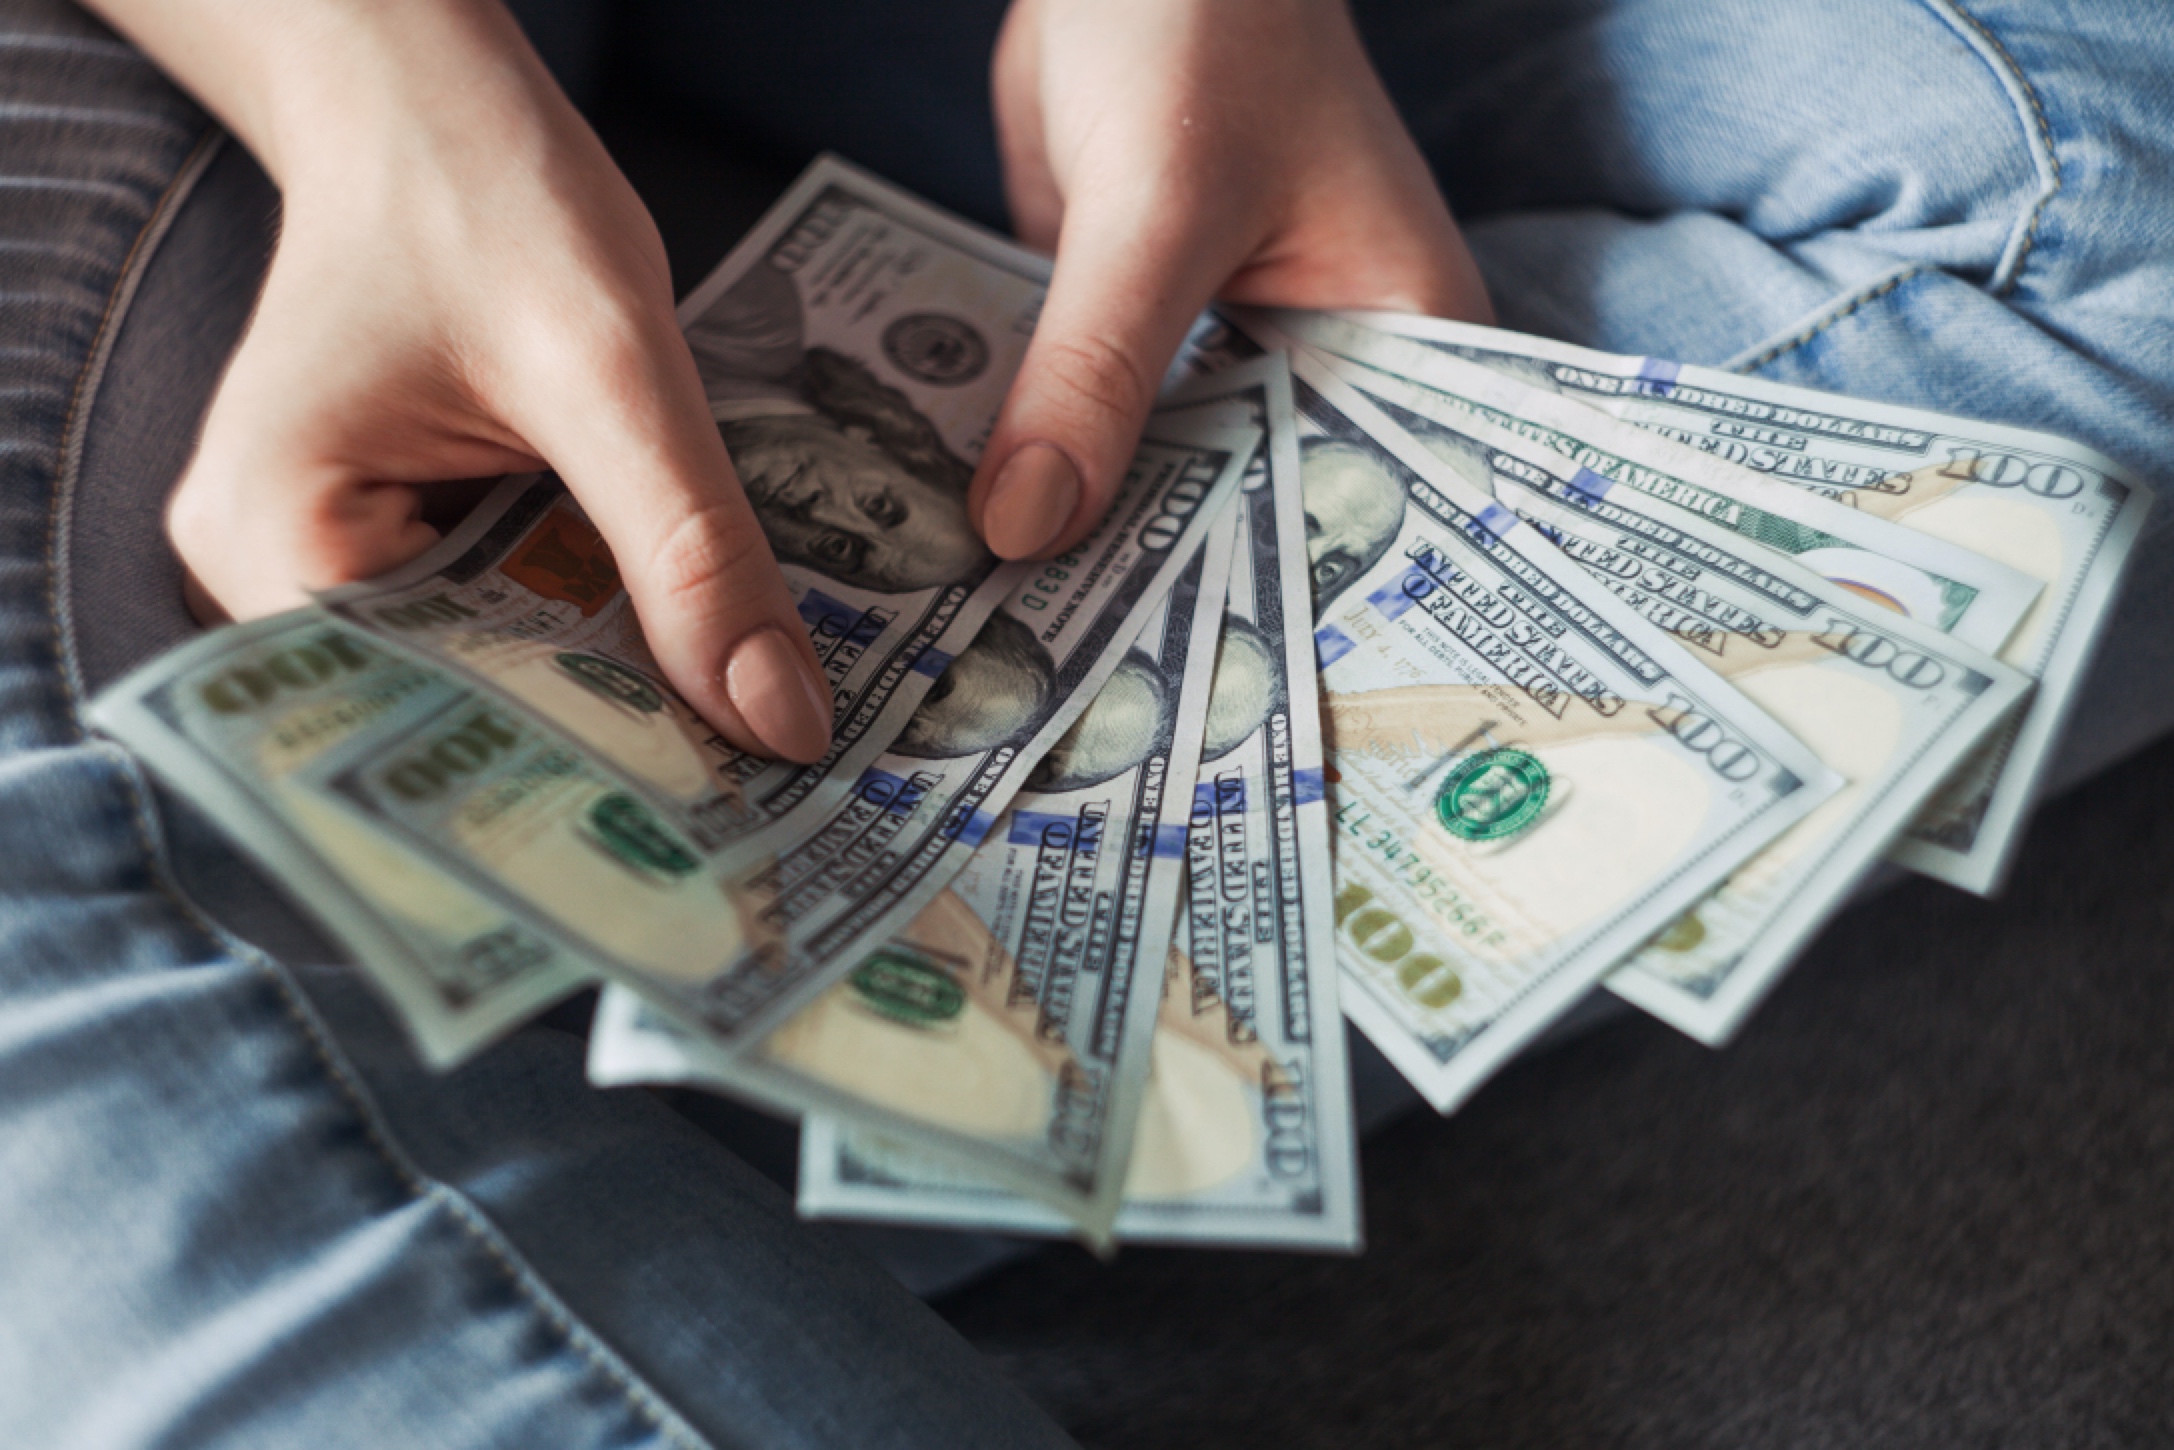 15 Unusual Ways to Earn Cash Fast